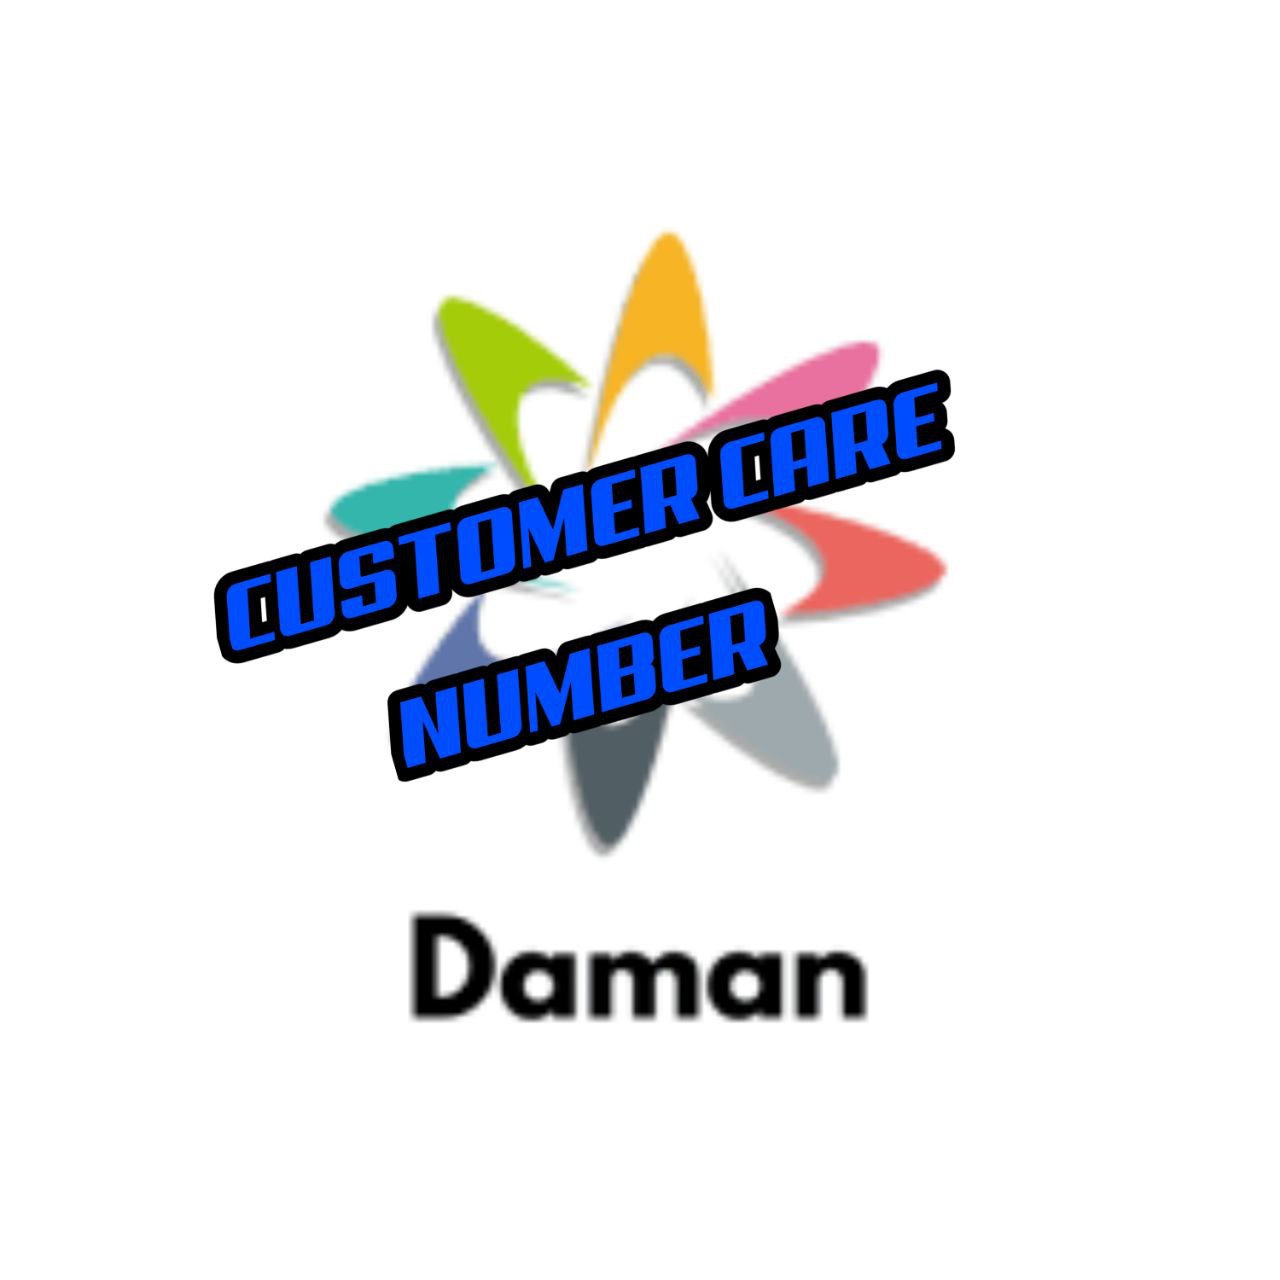 Daman Games Customer Care Number